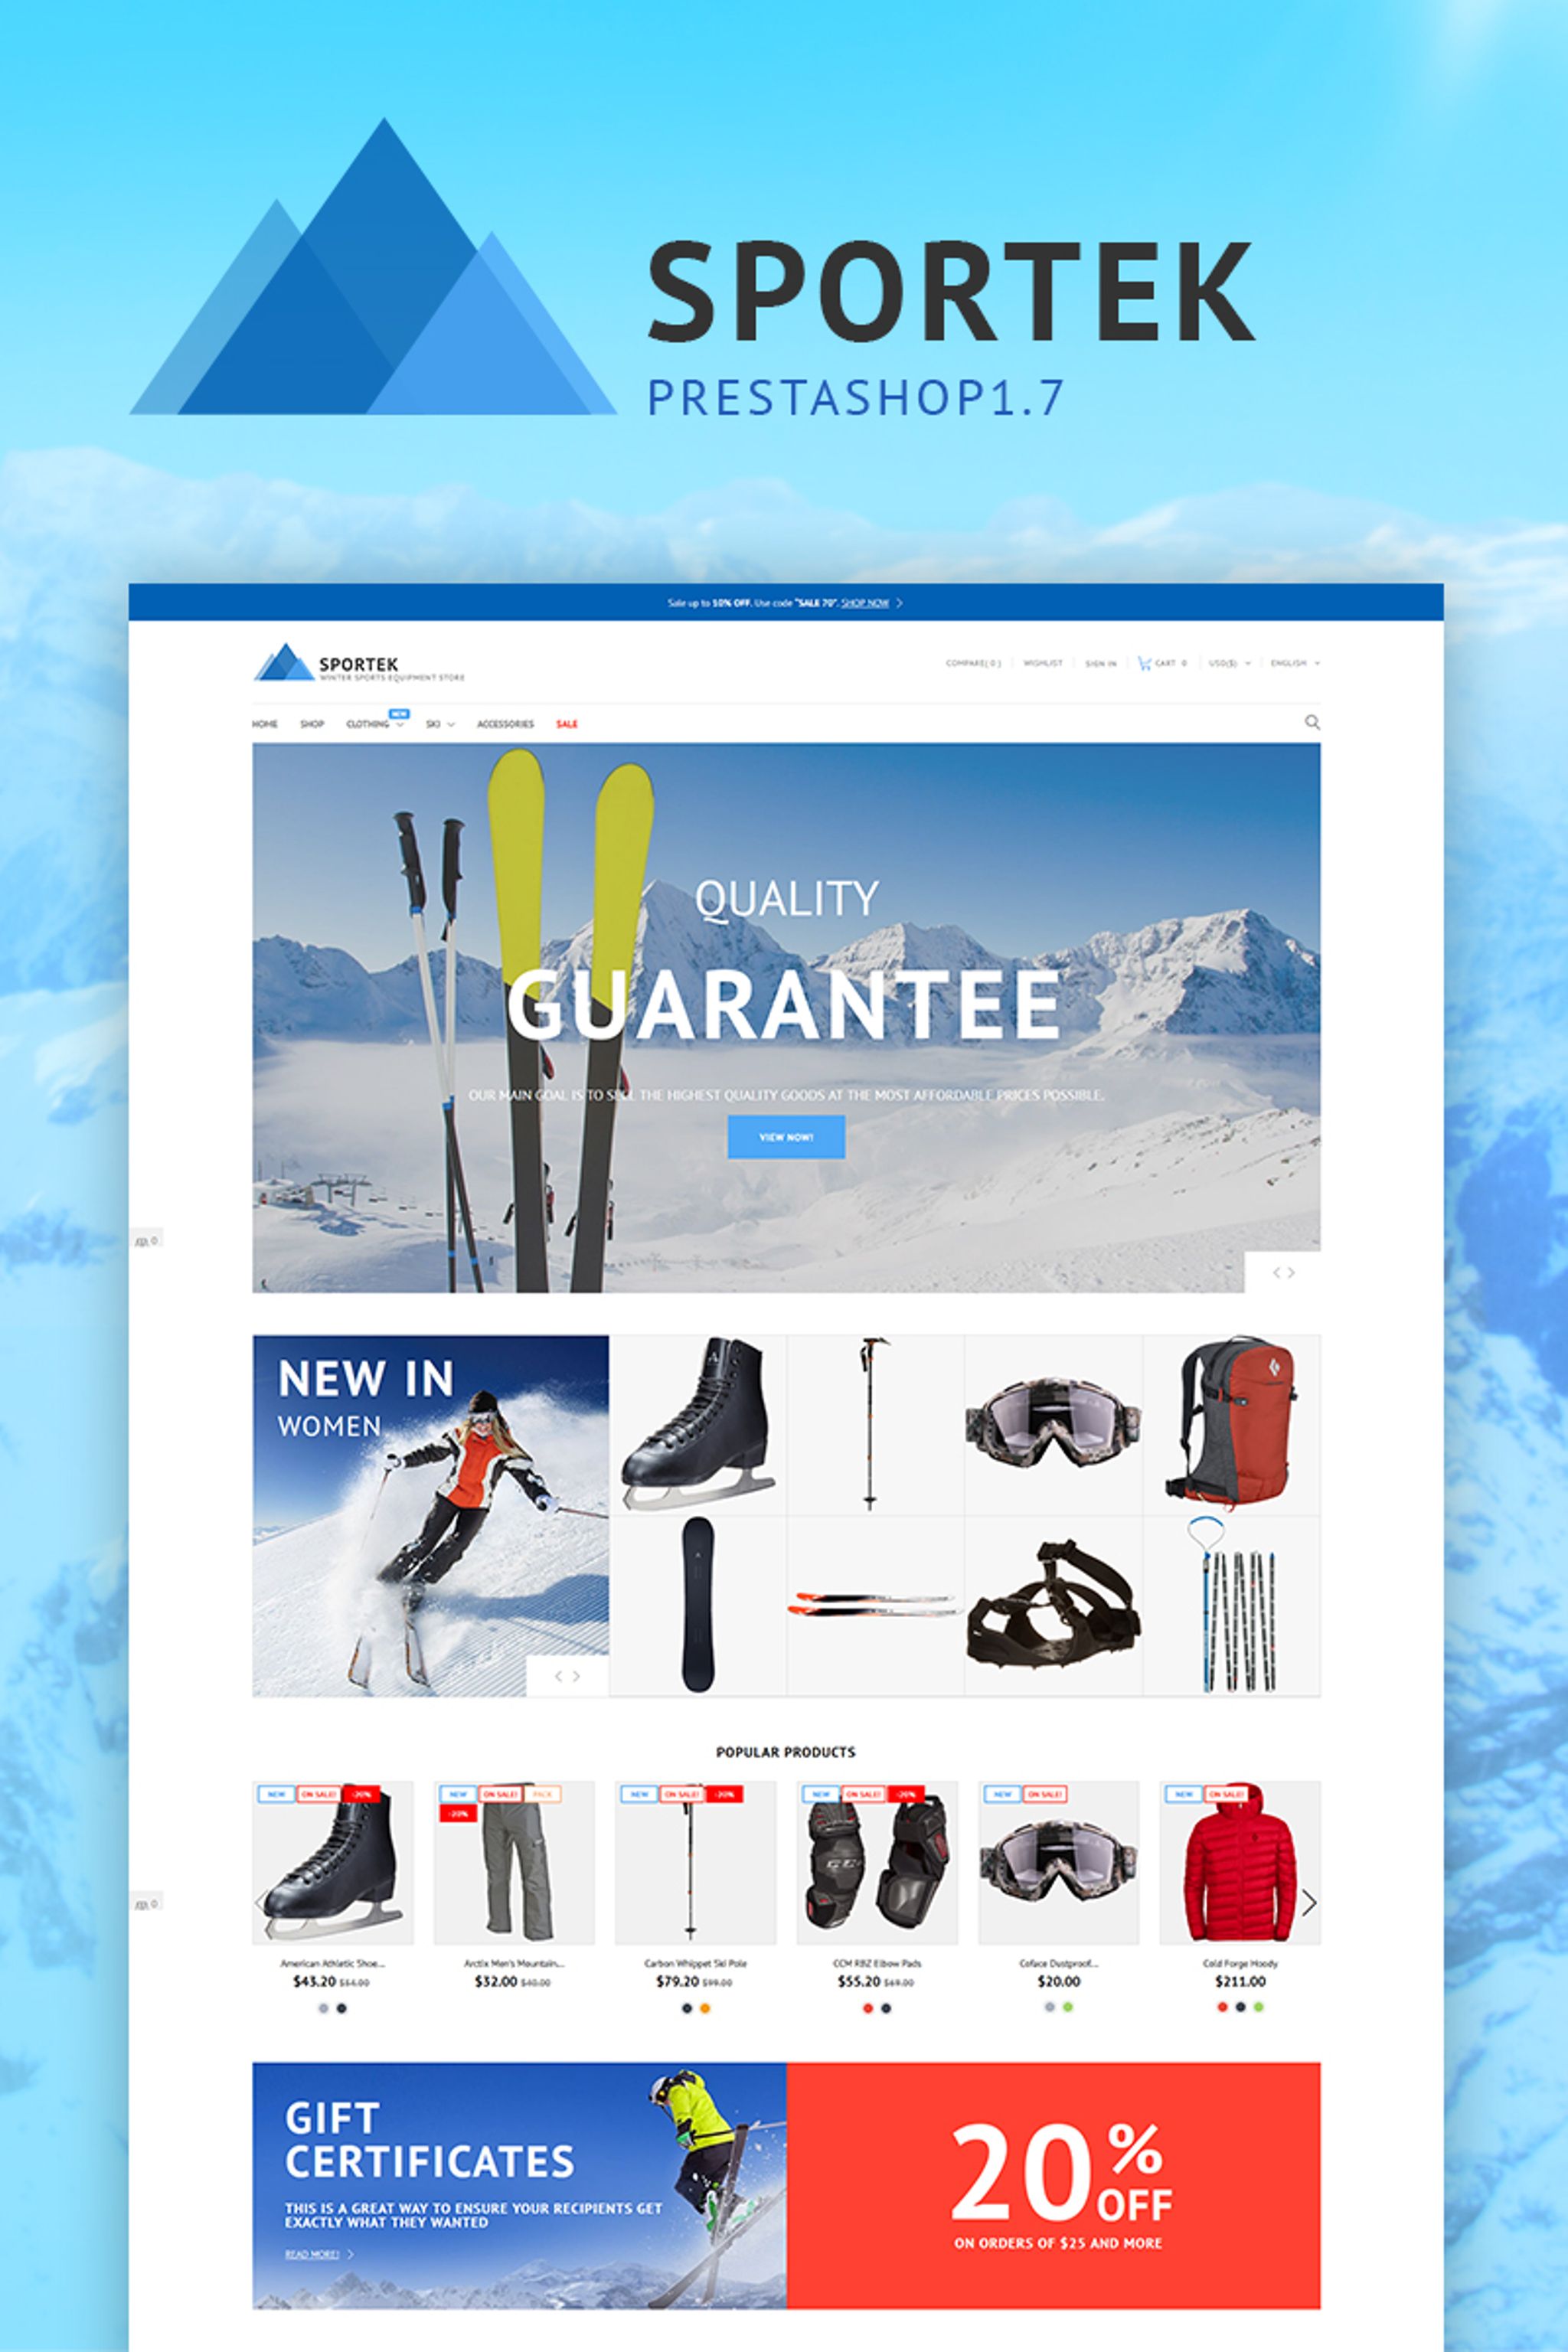 Sportek - Winter Sports Equipment Store PrestaShop Theme